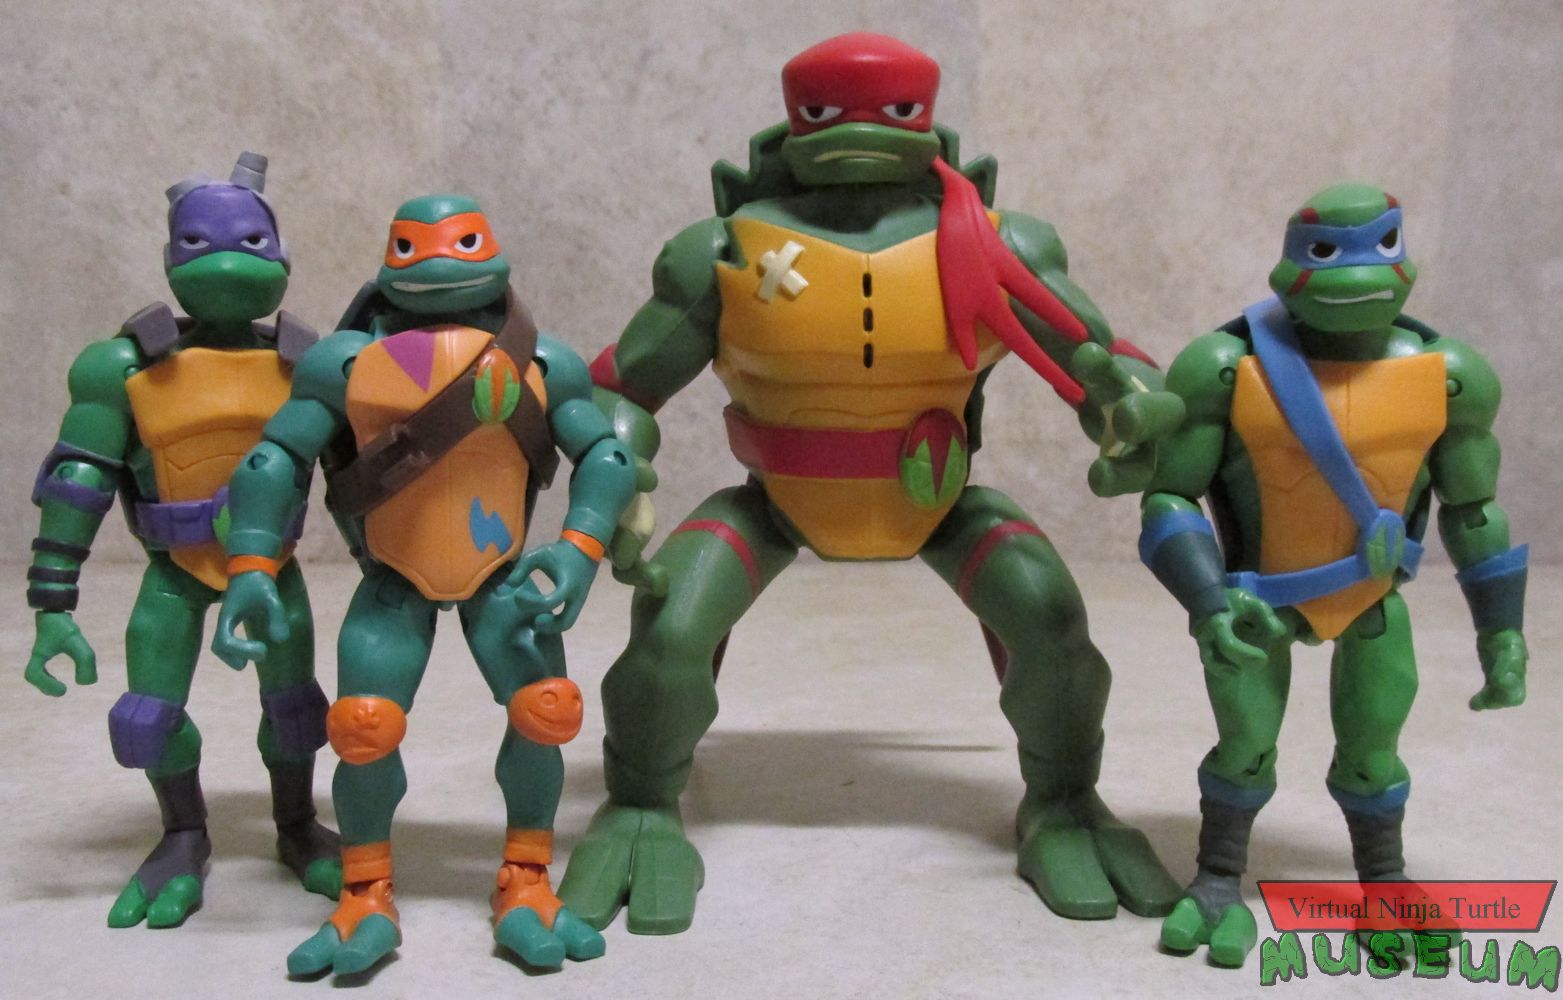 Deluxe Raphael with Basic Assortment Leo, Michelangelo and Donatello